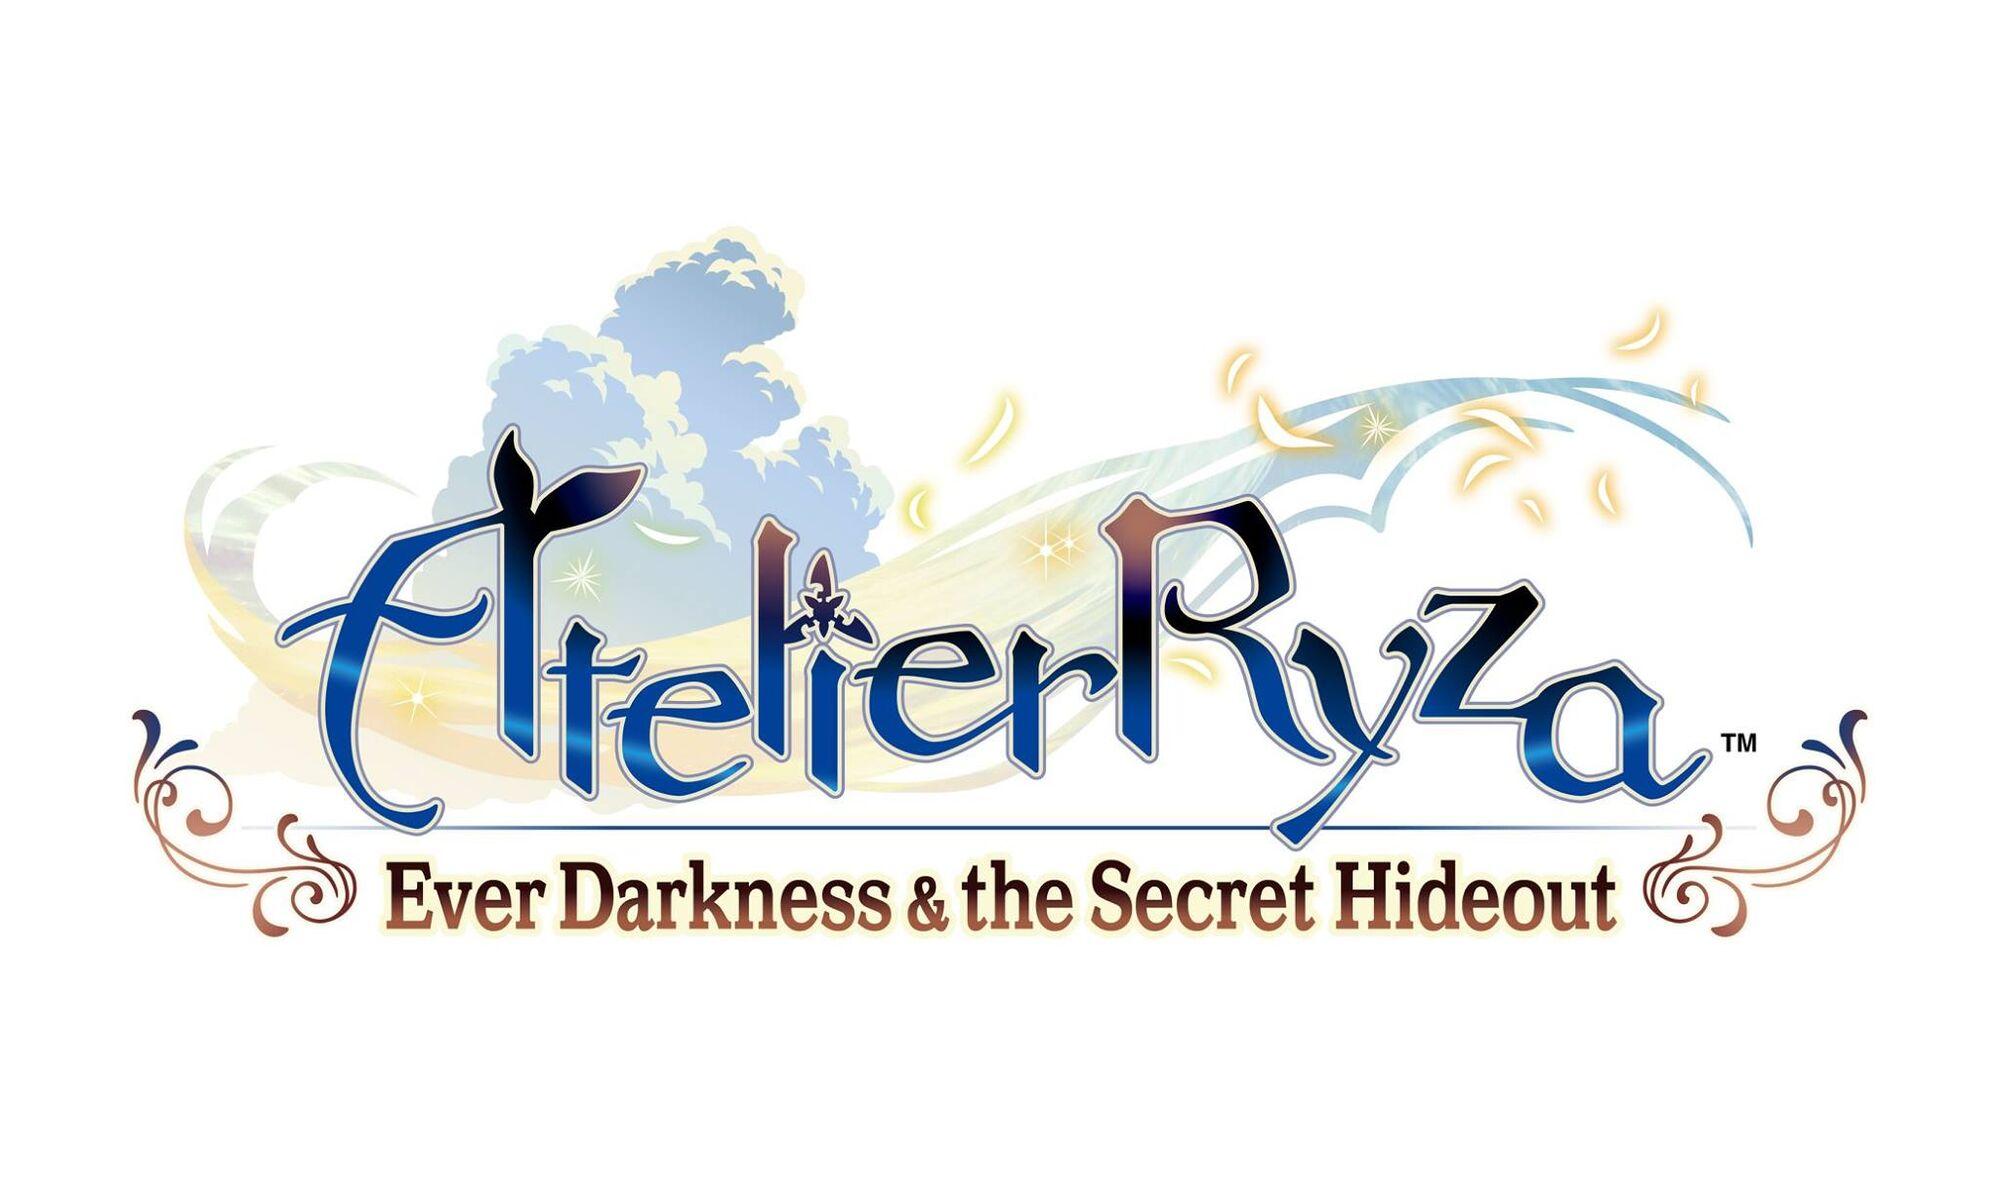 Atelier Ryza: Ever Darkness & the Secret Hideout. Atelier